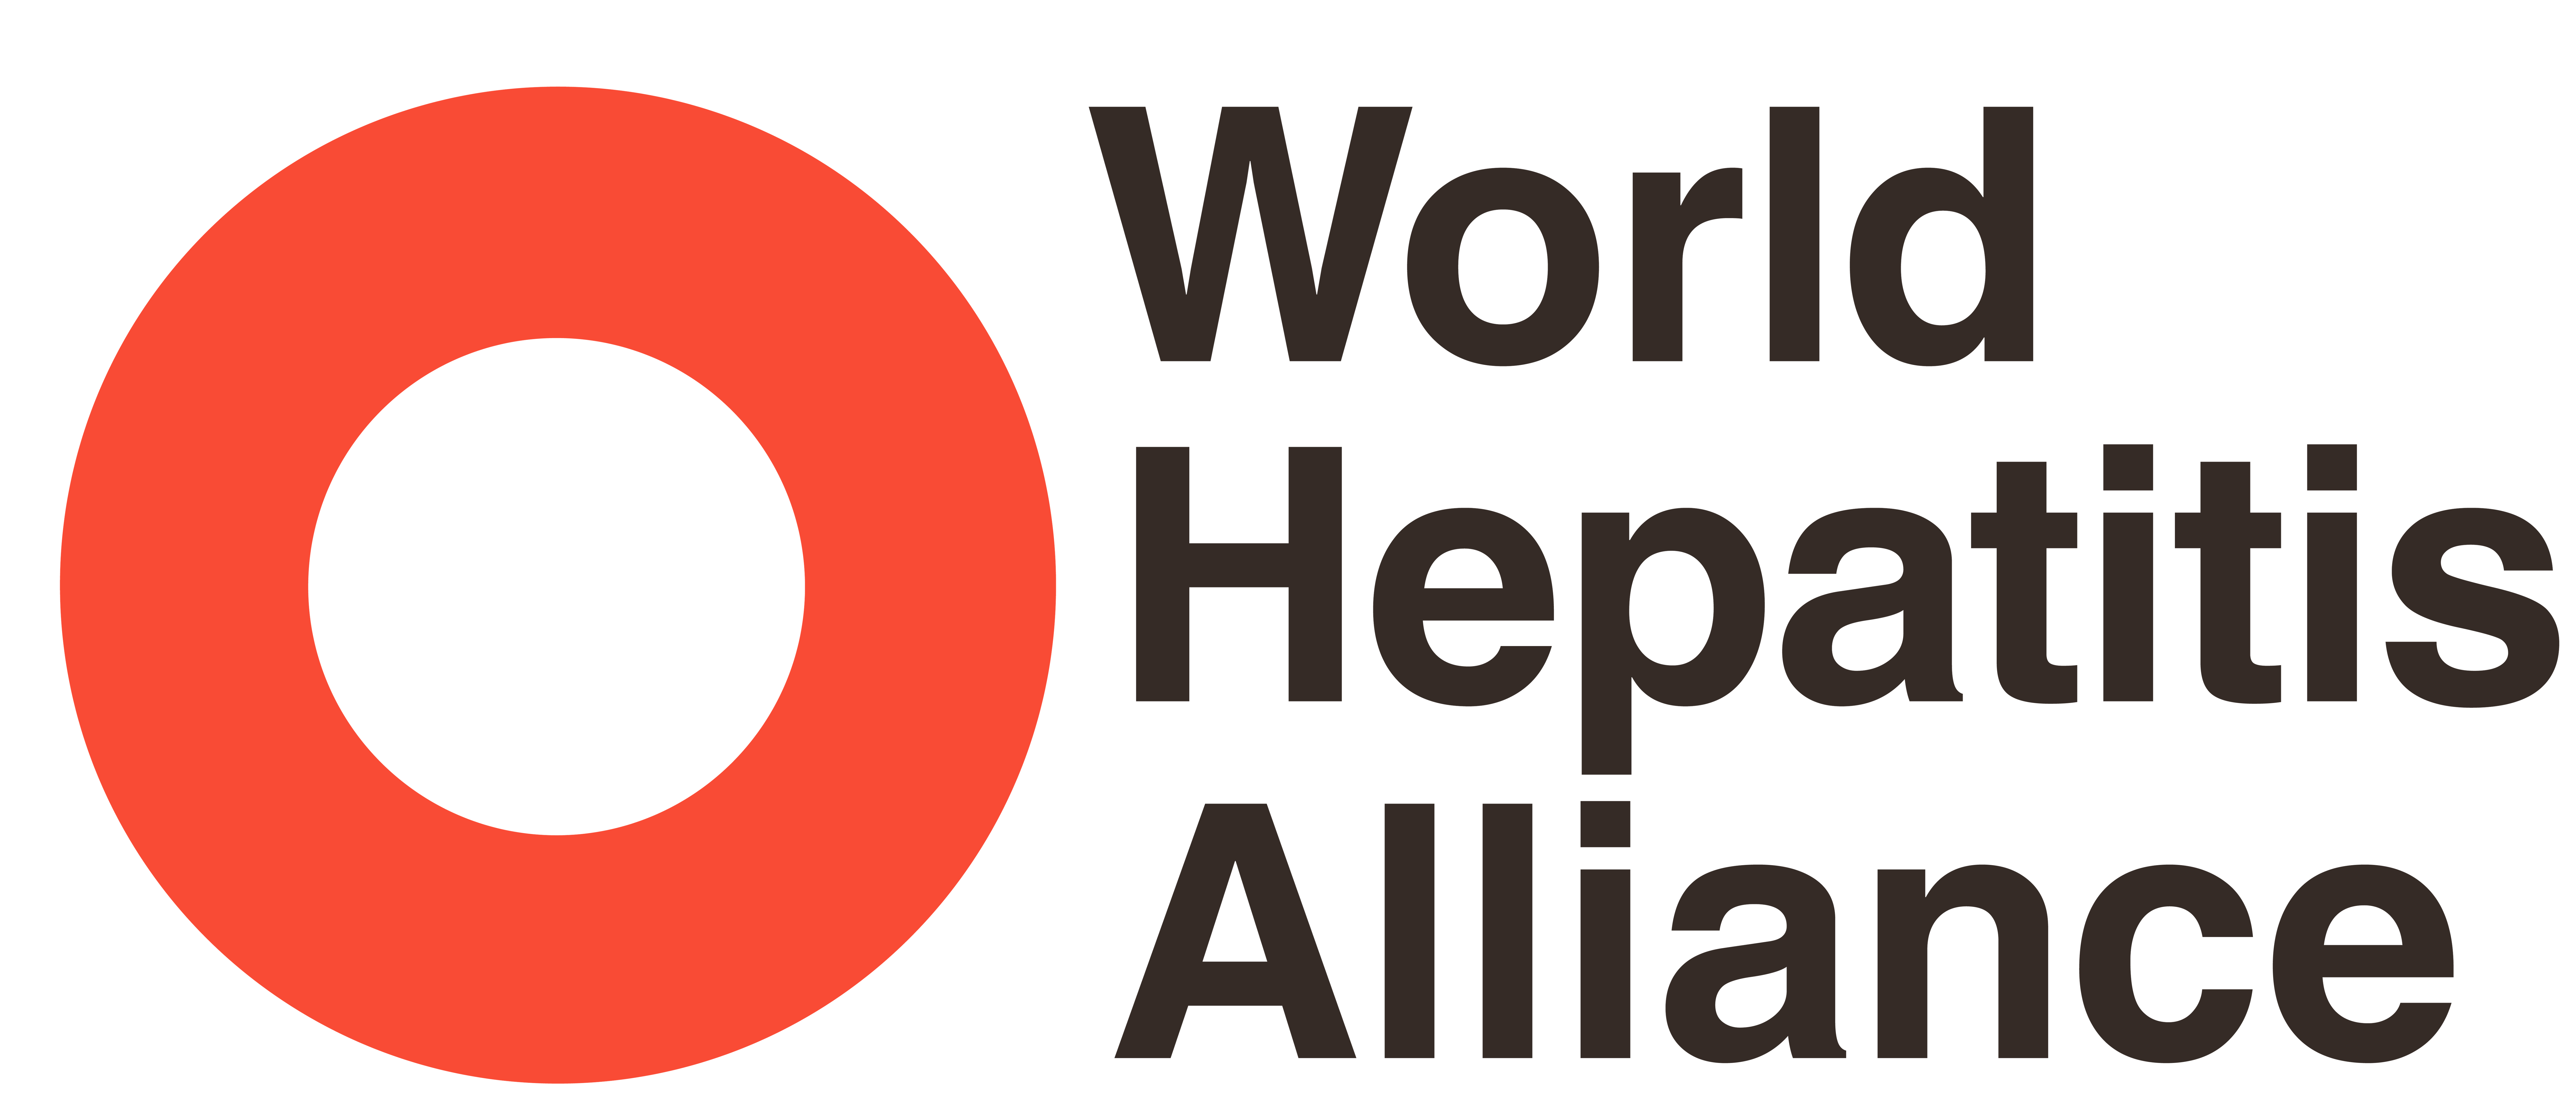 World Hepatitis Alliance